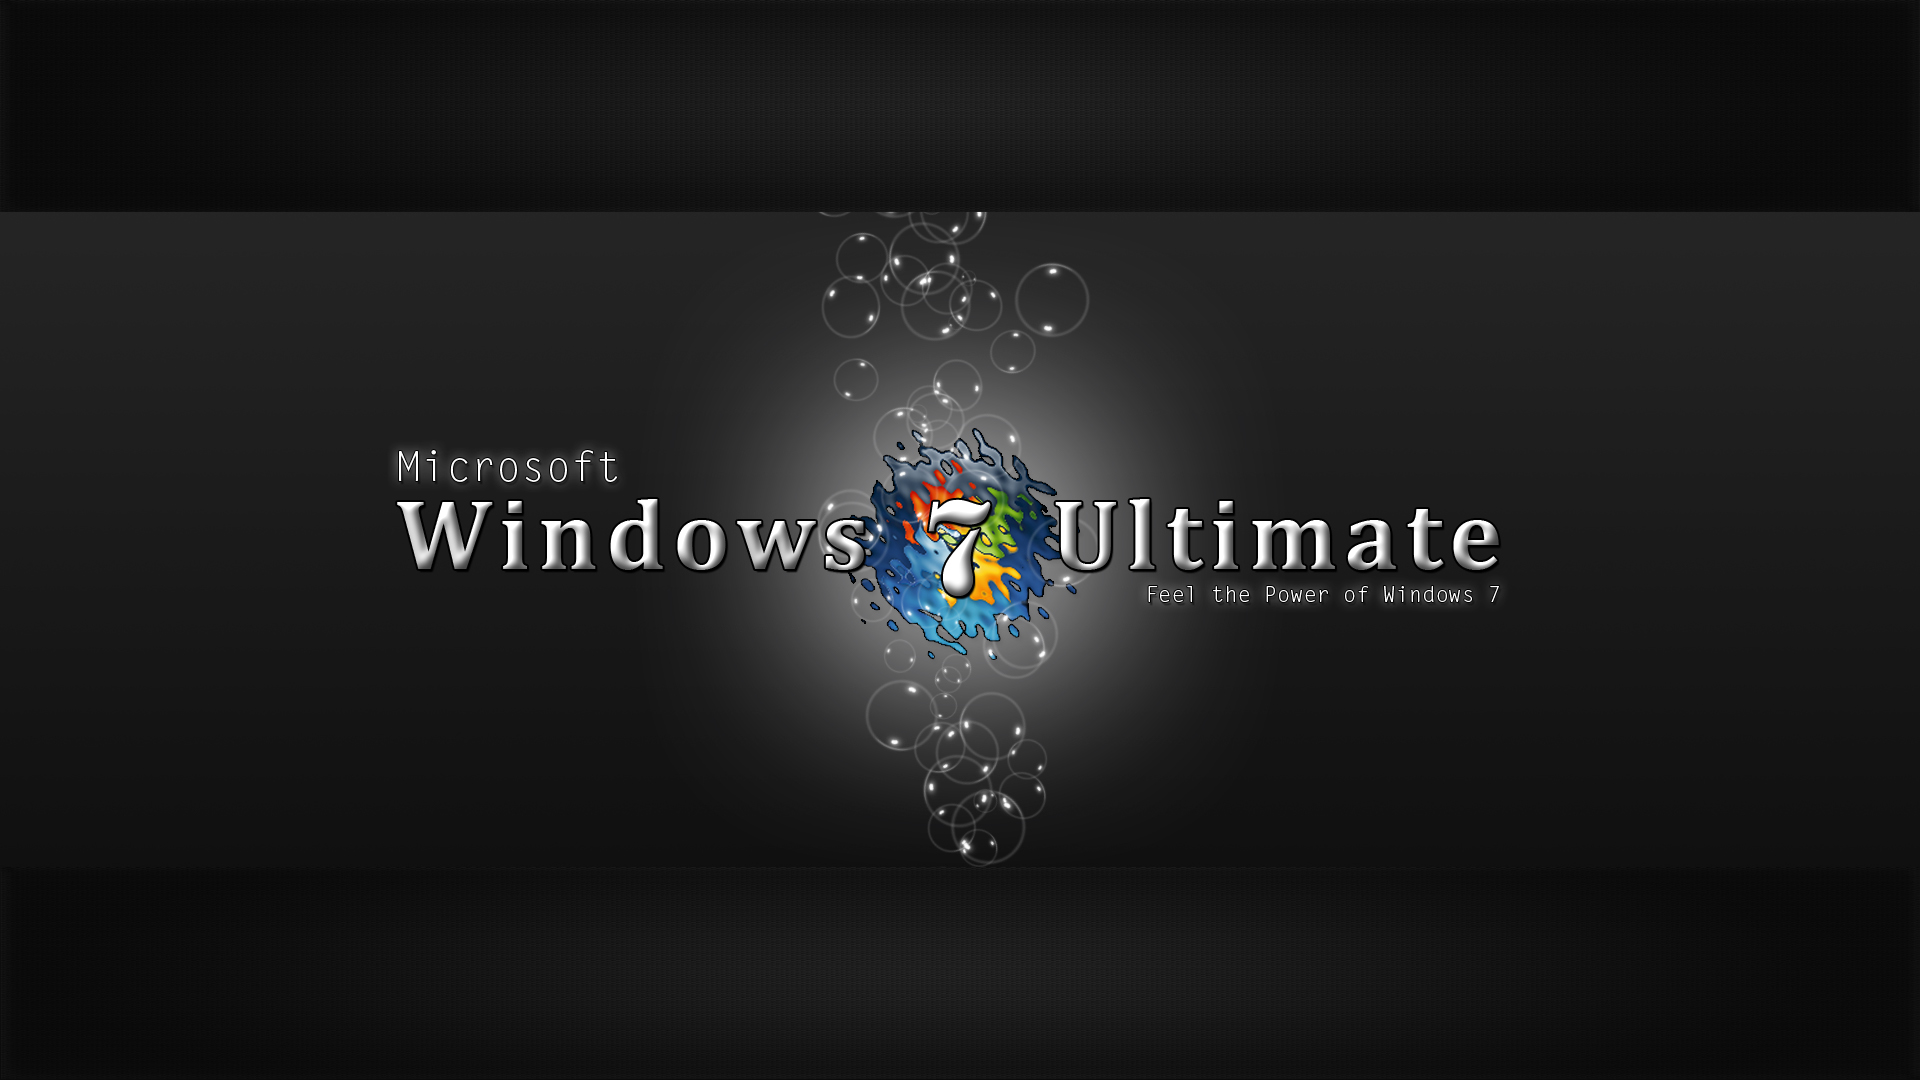 Windows Ultimate Wallpaper HD Black